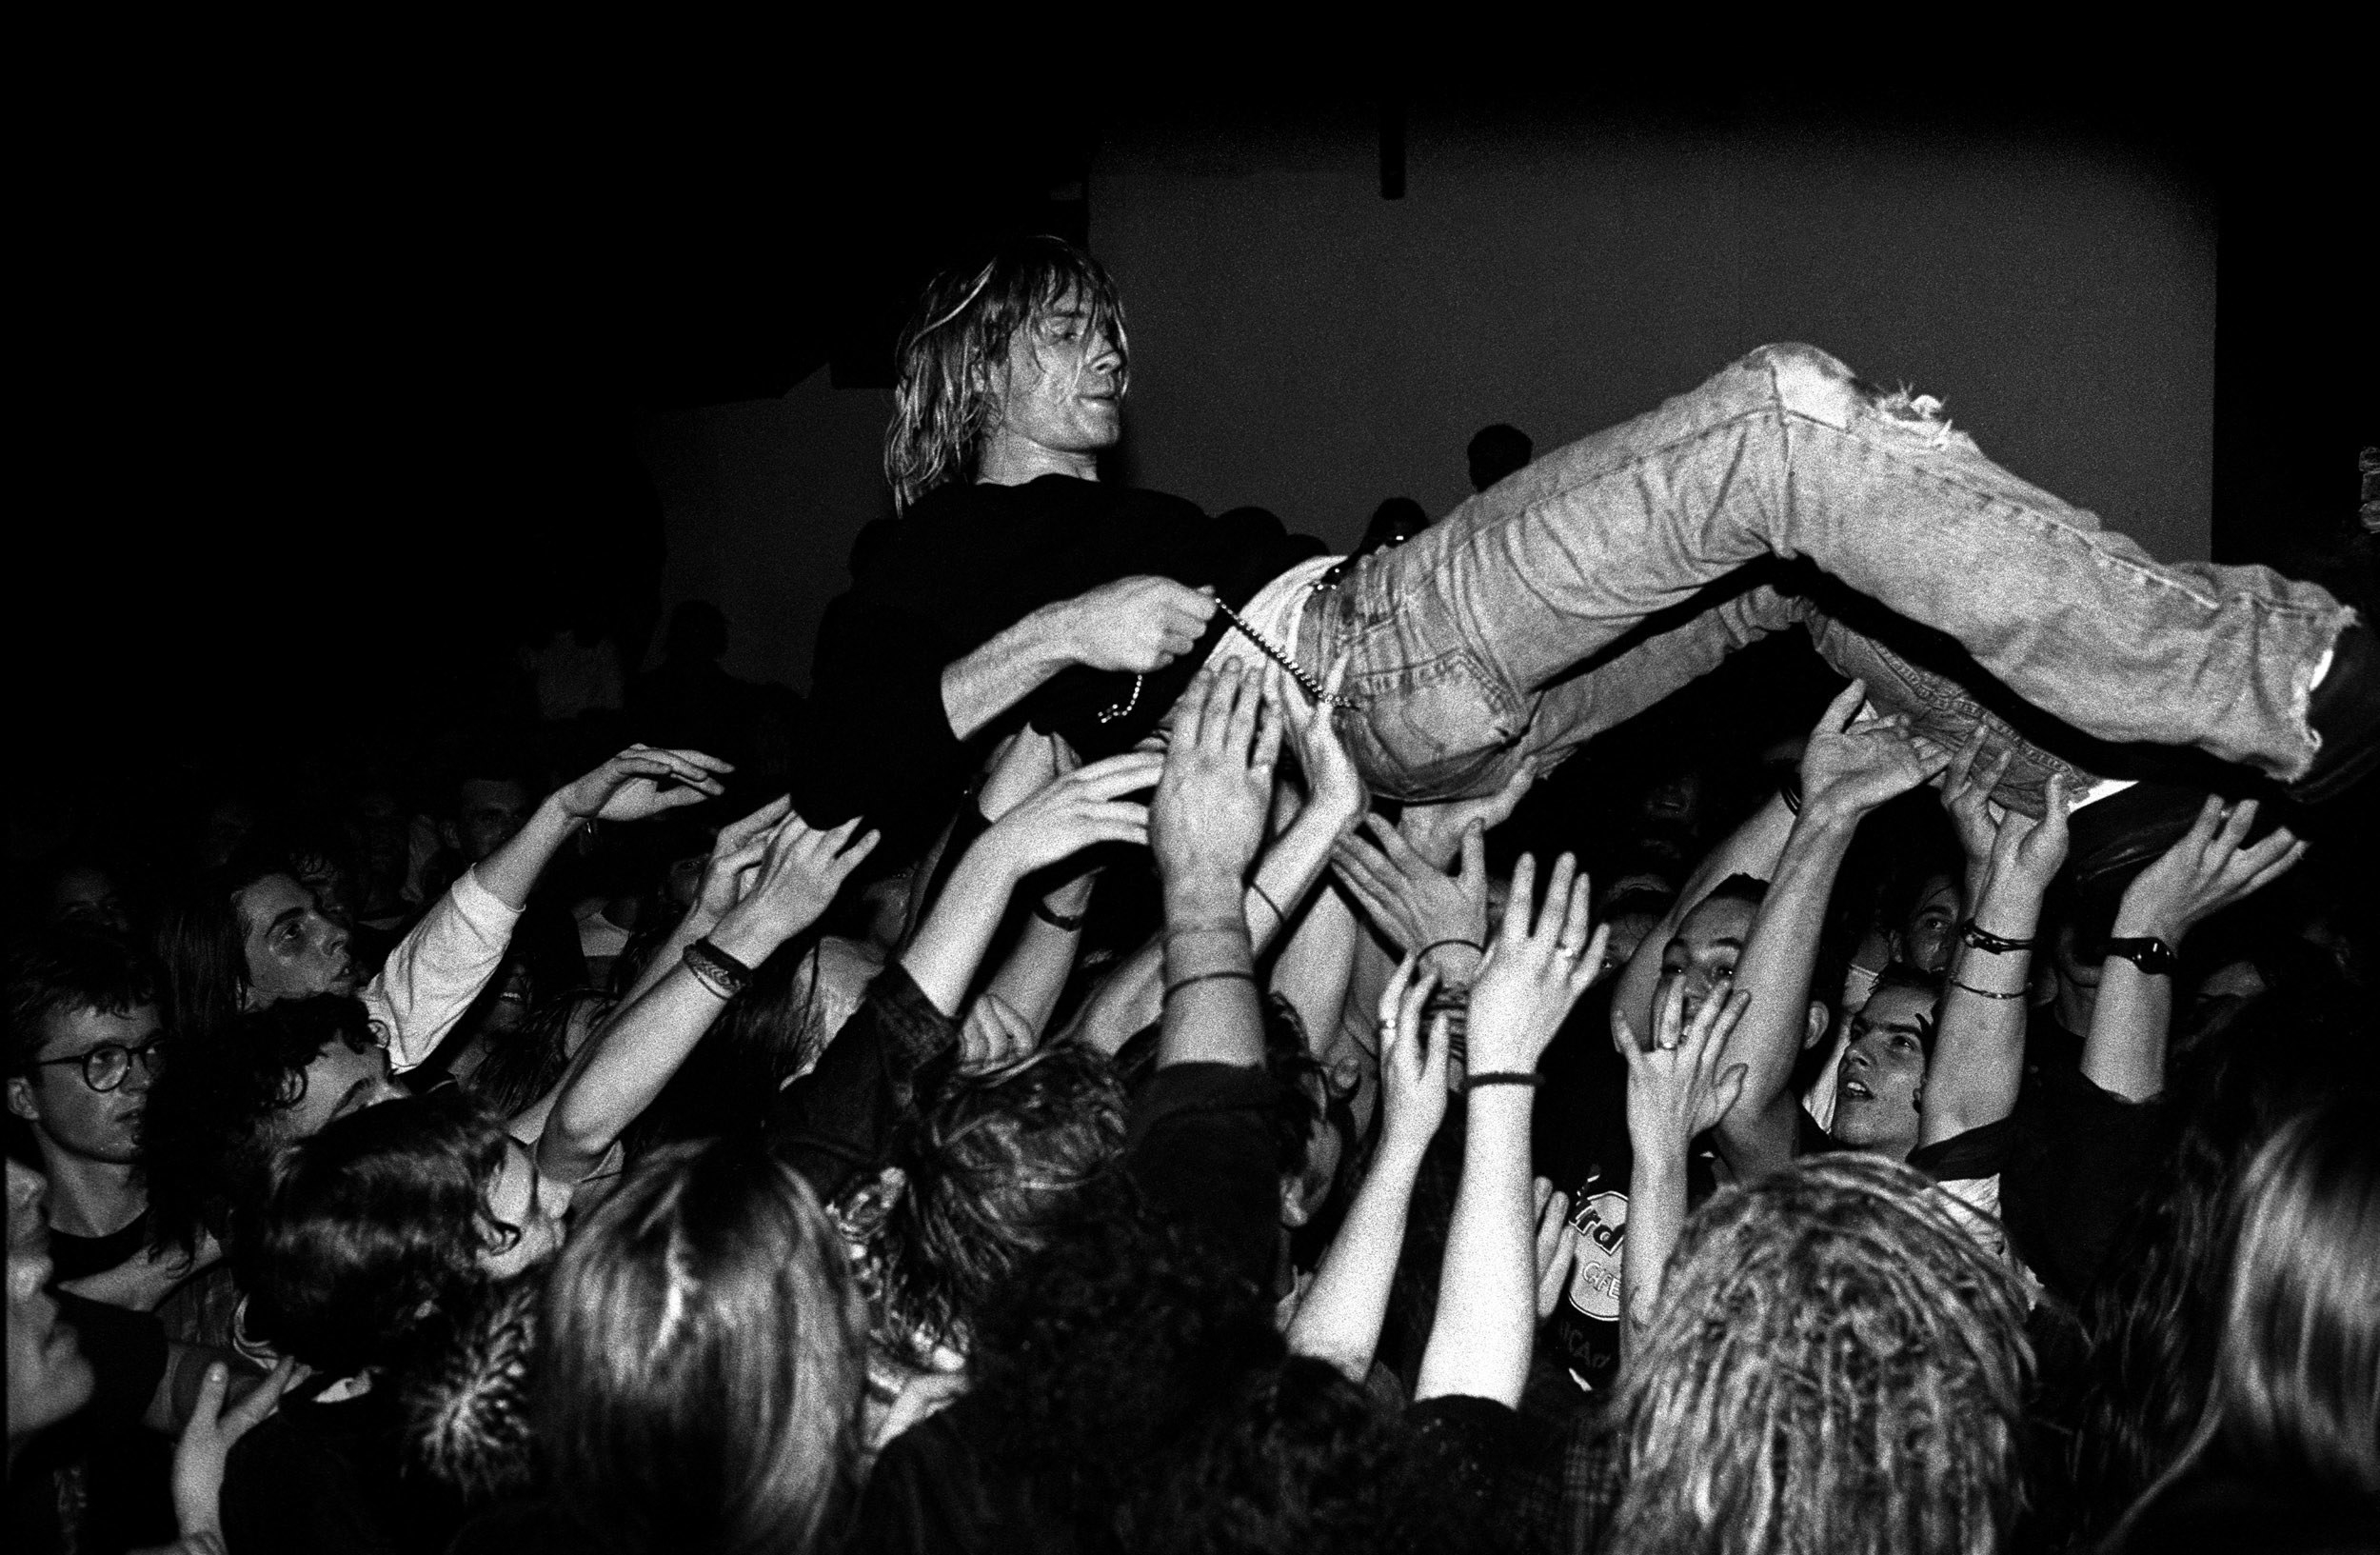 Kurt Cobain crowd surfs nirvana